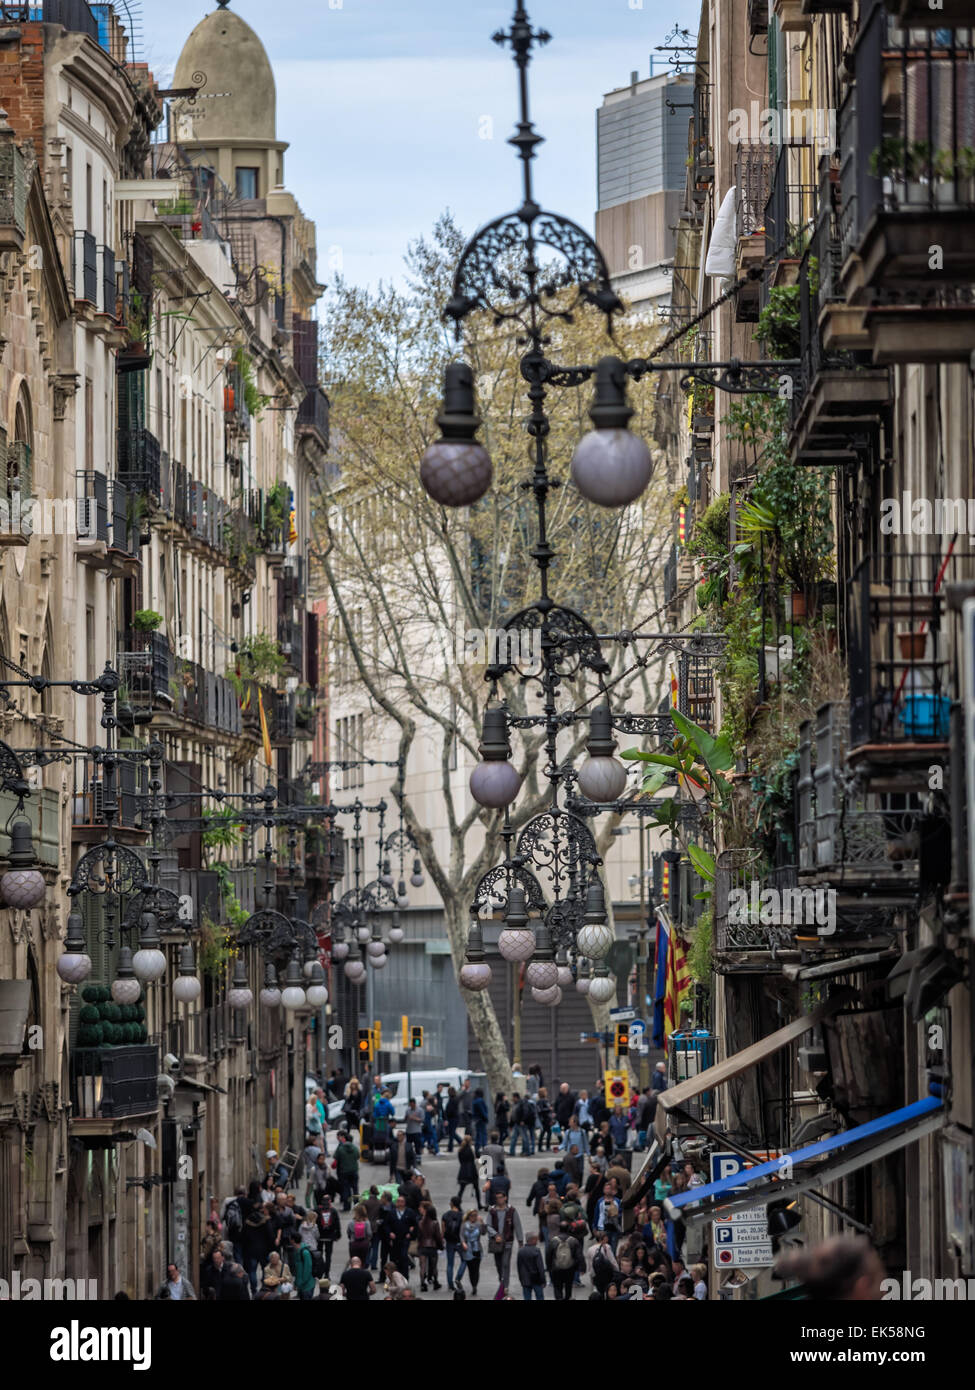 Ornate street lamps on buildings in Barcelona, Spain Stock Photo